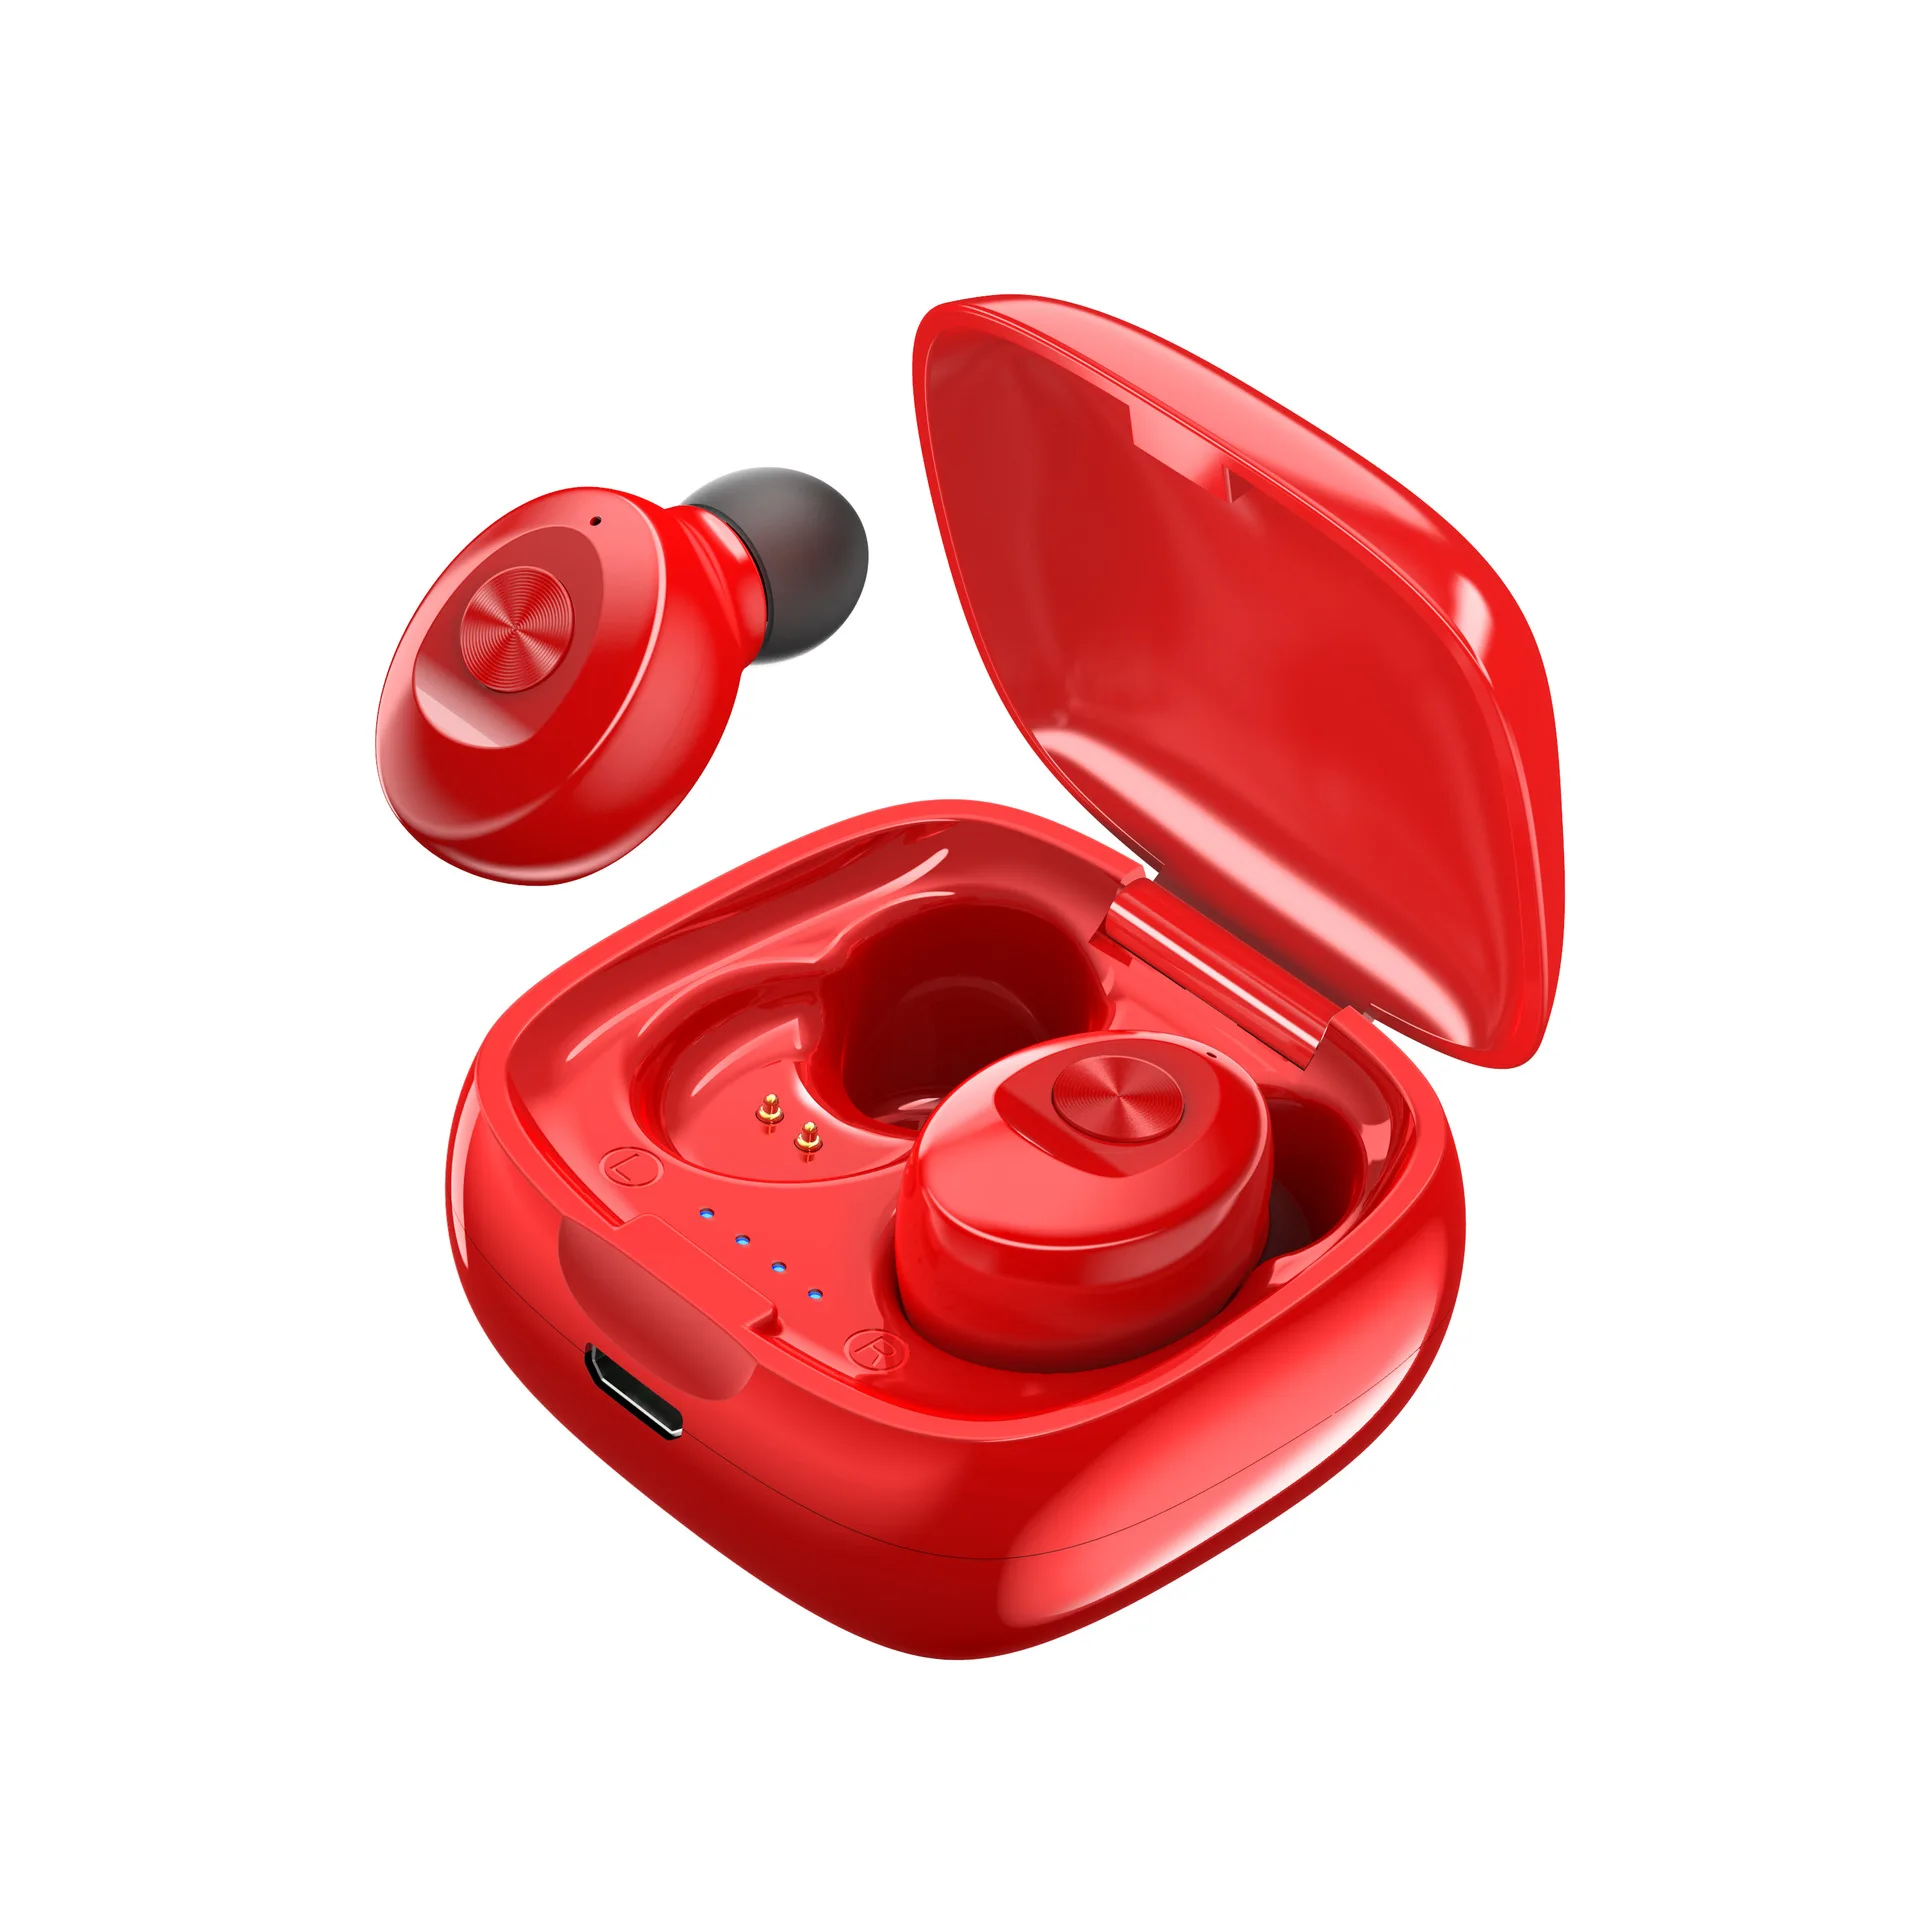 

Free Shipping 1 Sample OK IPX5 5.0 TWS Wireless Stereo Earbuds Hifi Sounds Gaming Sports Wireless Headphone Earphones